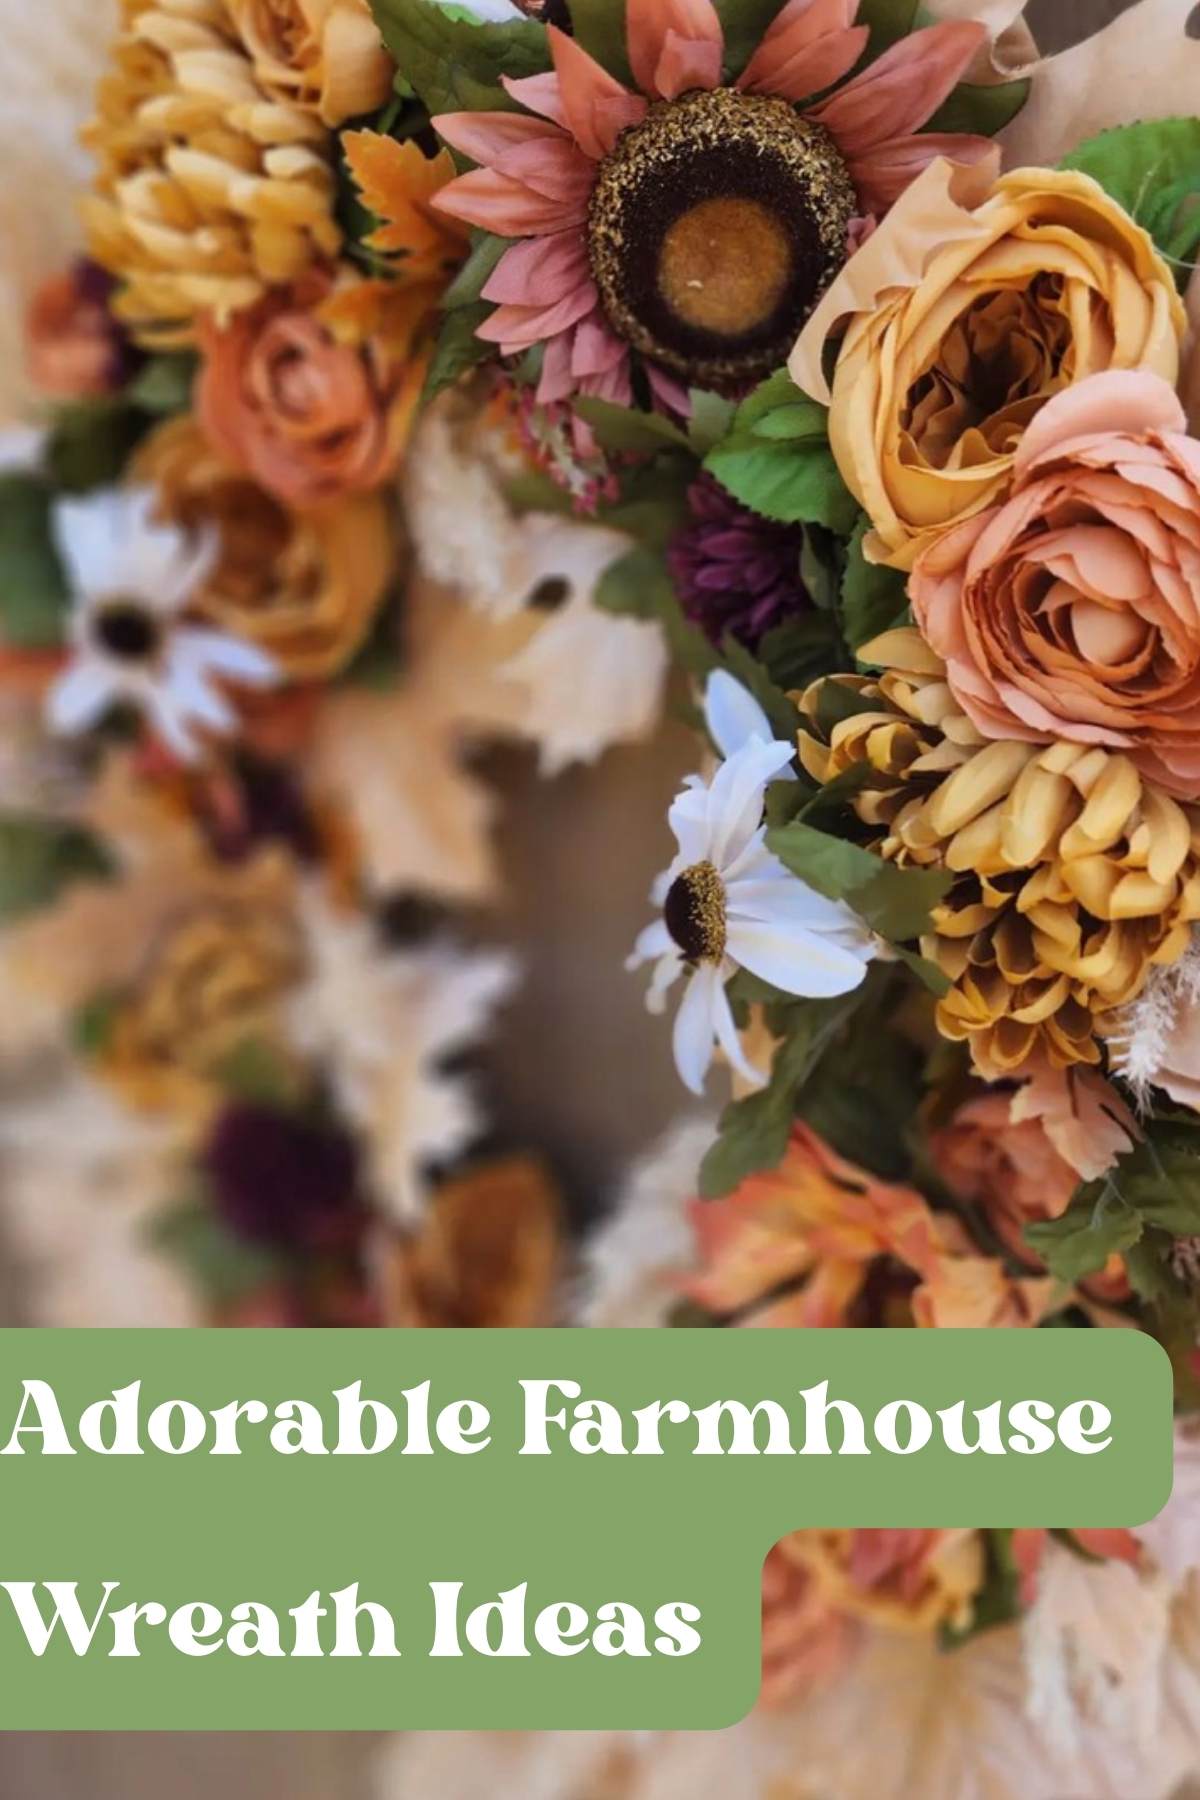 Adorable Farmhouse Wreath Ideas. Photo of rustic Floral wreath.